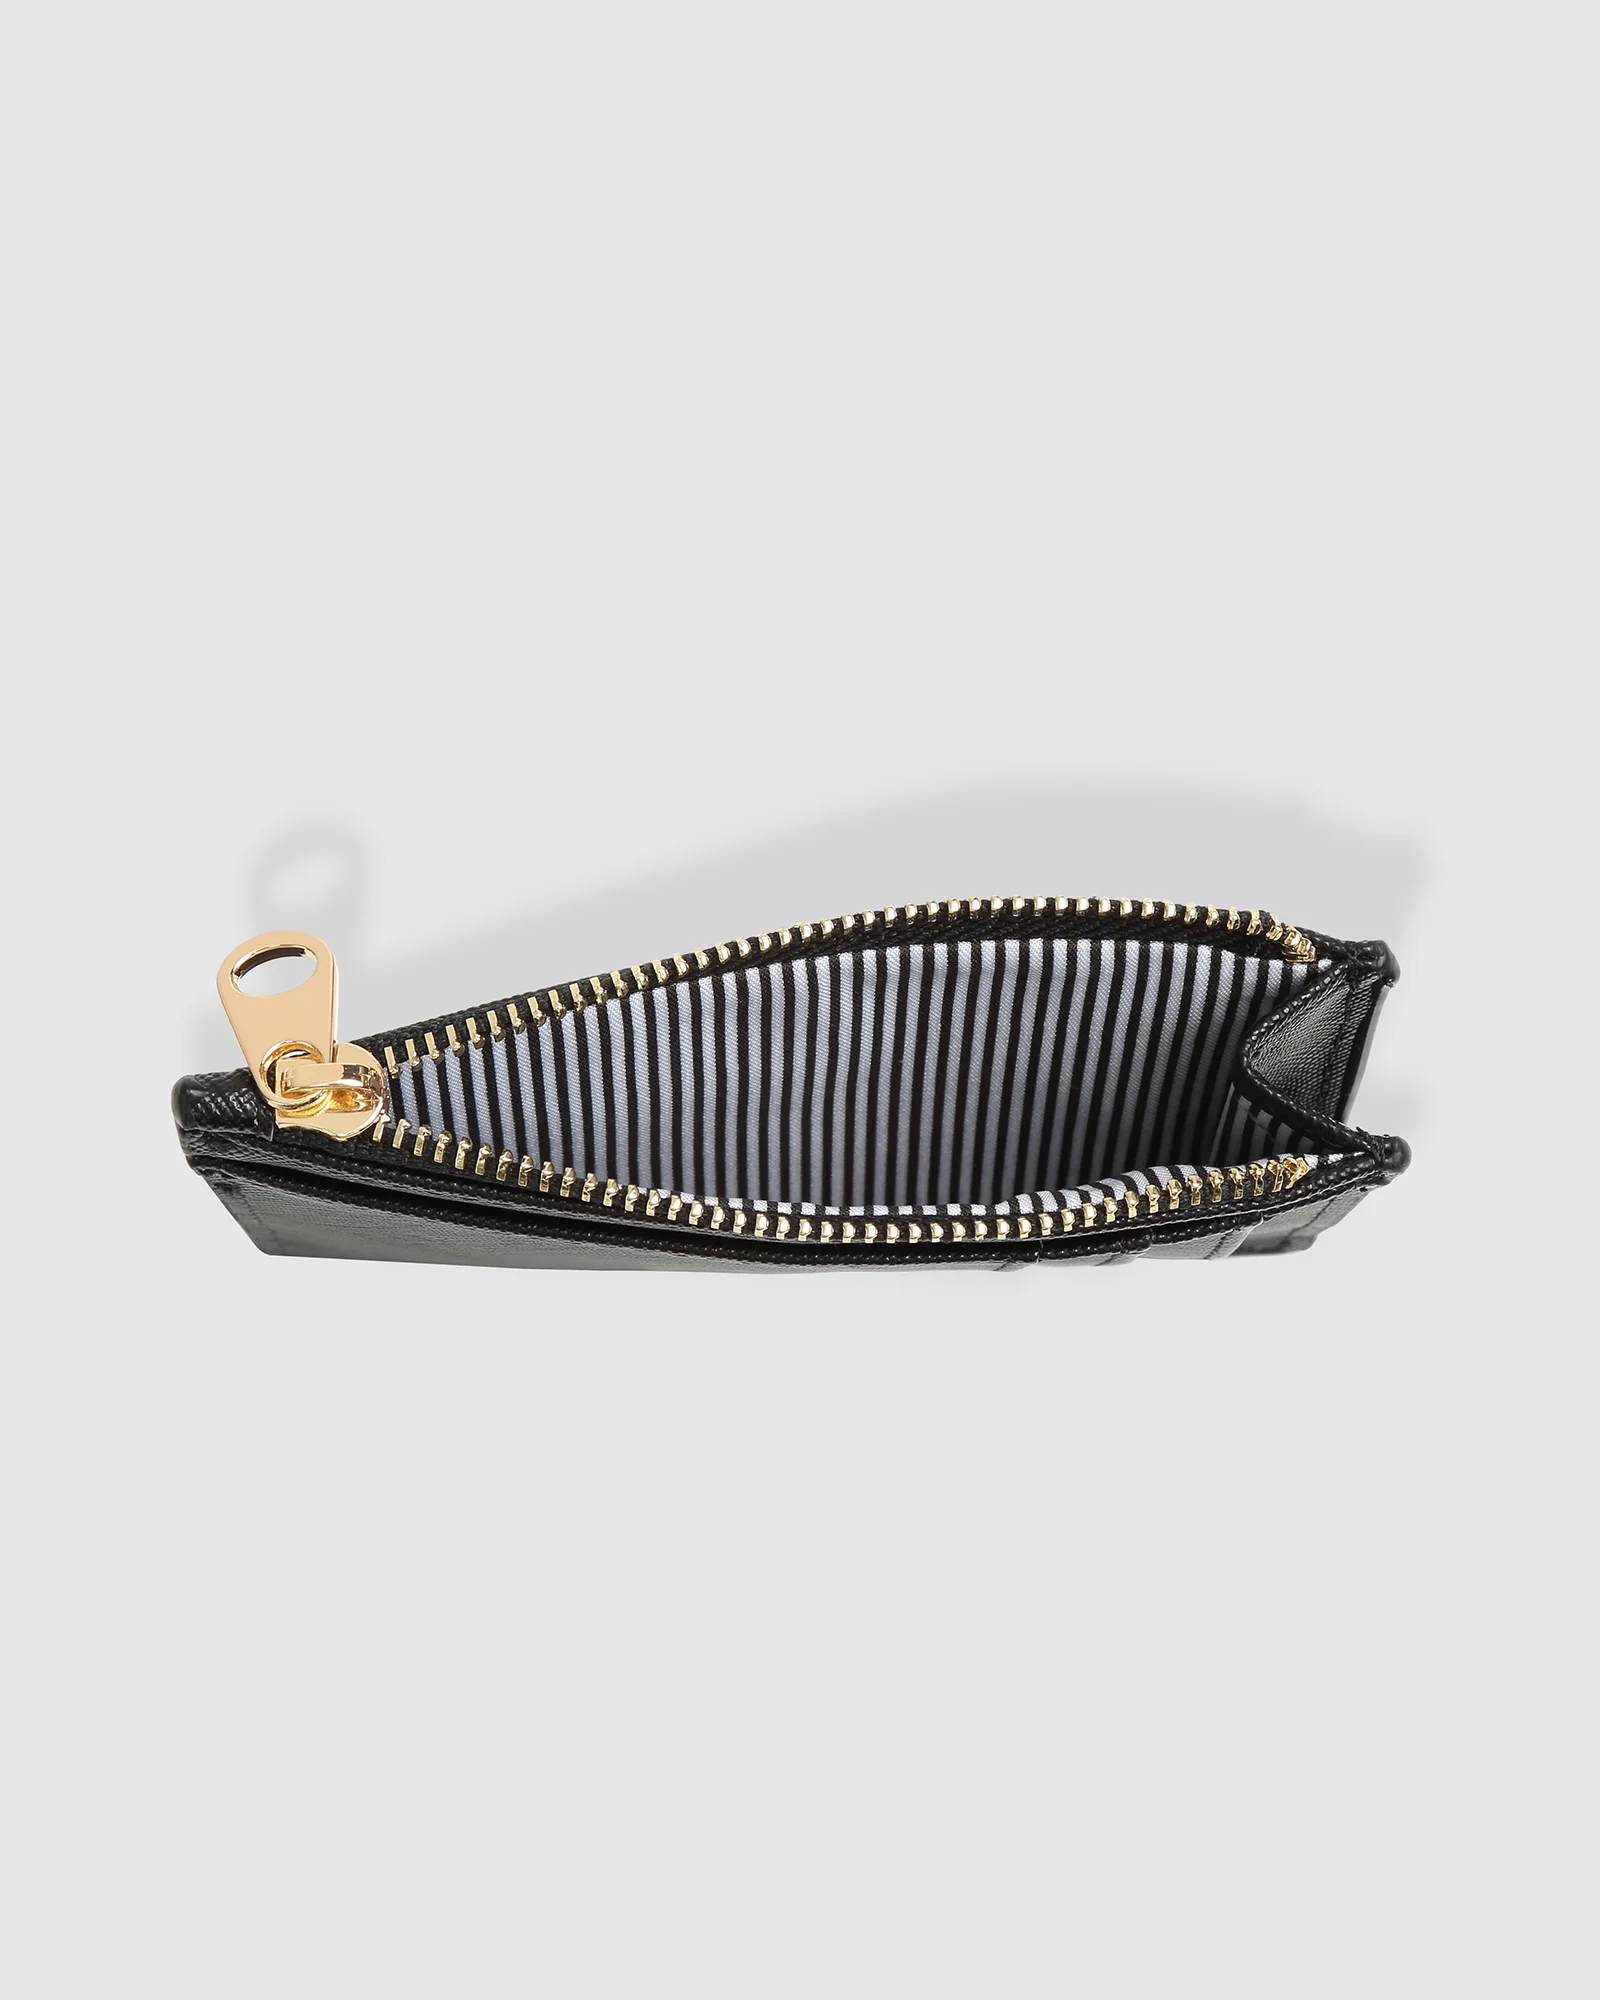 Louenhide Cara Cardholder - Black Accessories - Other Accessories - Handbags & Wallets by Louenhide | Grace the Boutique